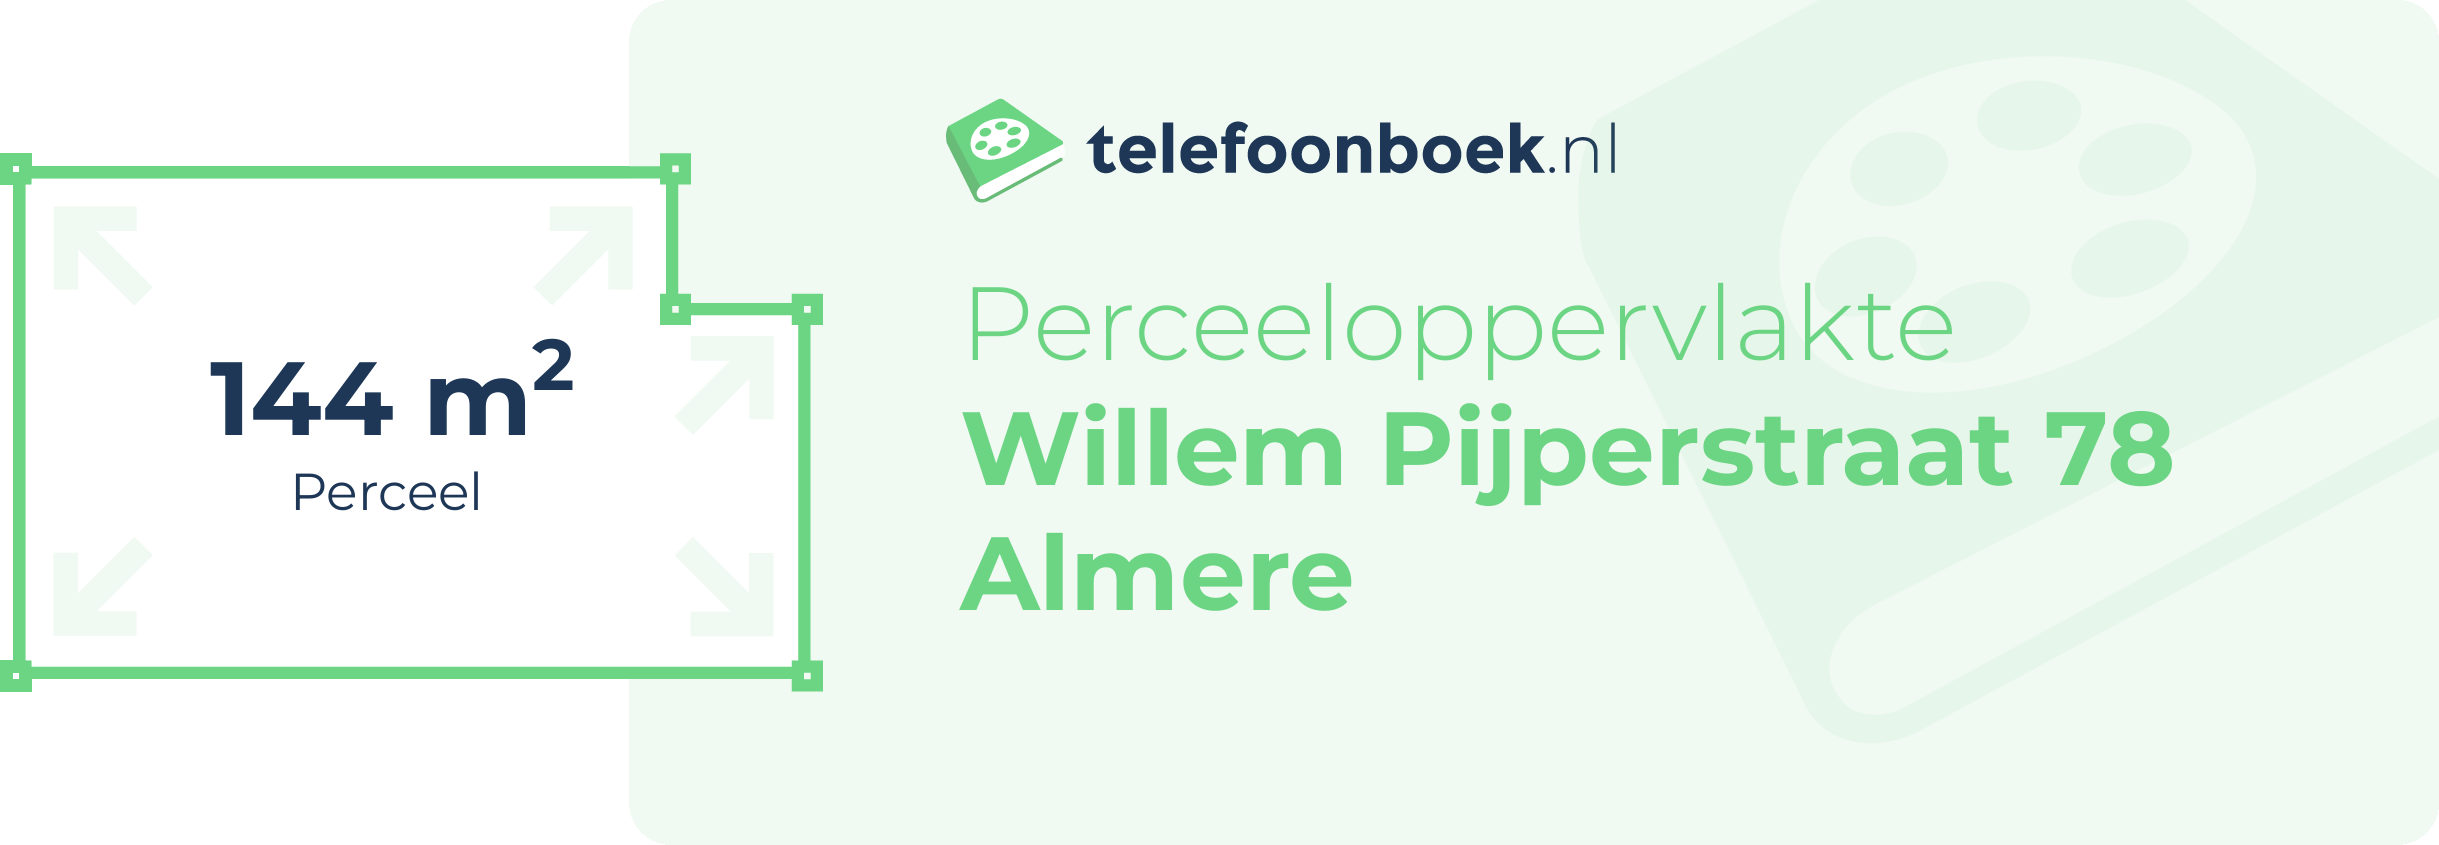 Perceeloppervlakte Willem Pijperstraat 78 Almere